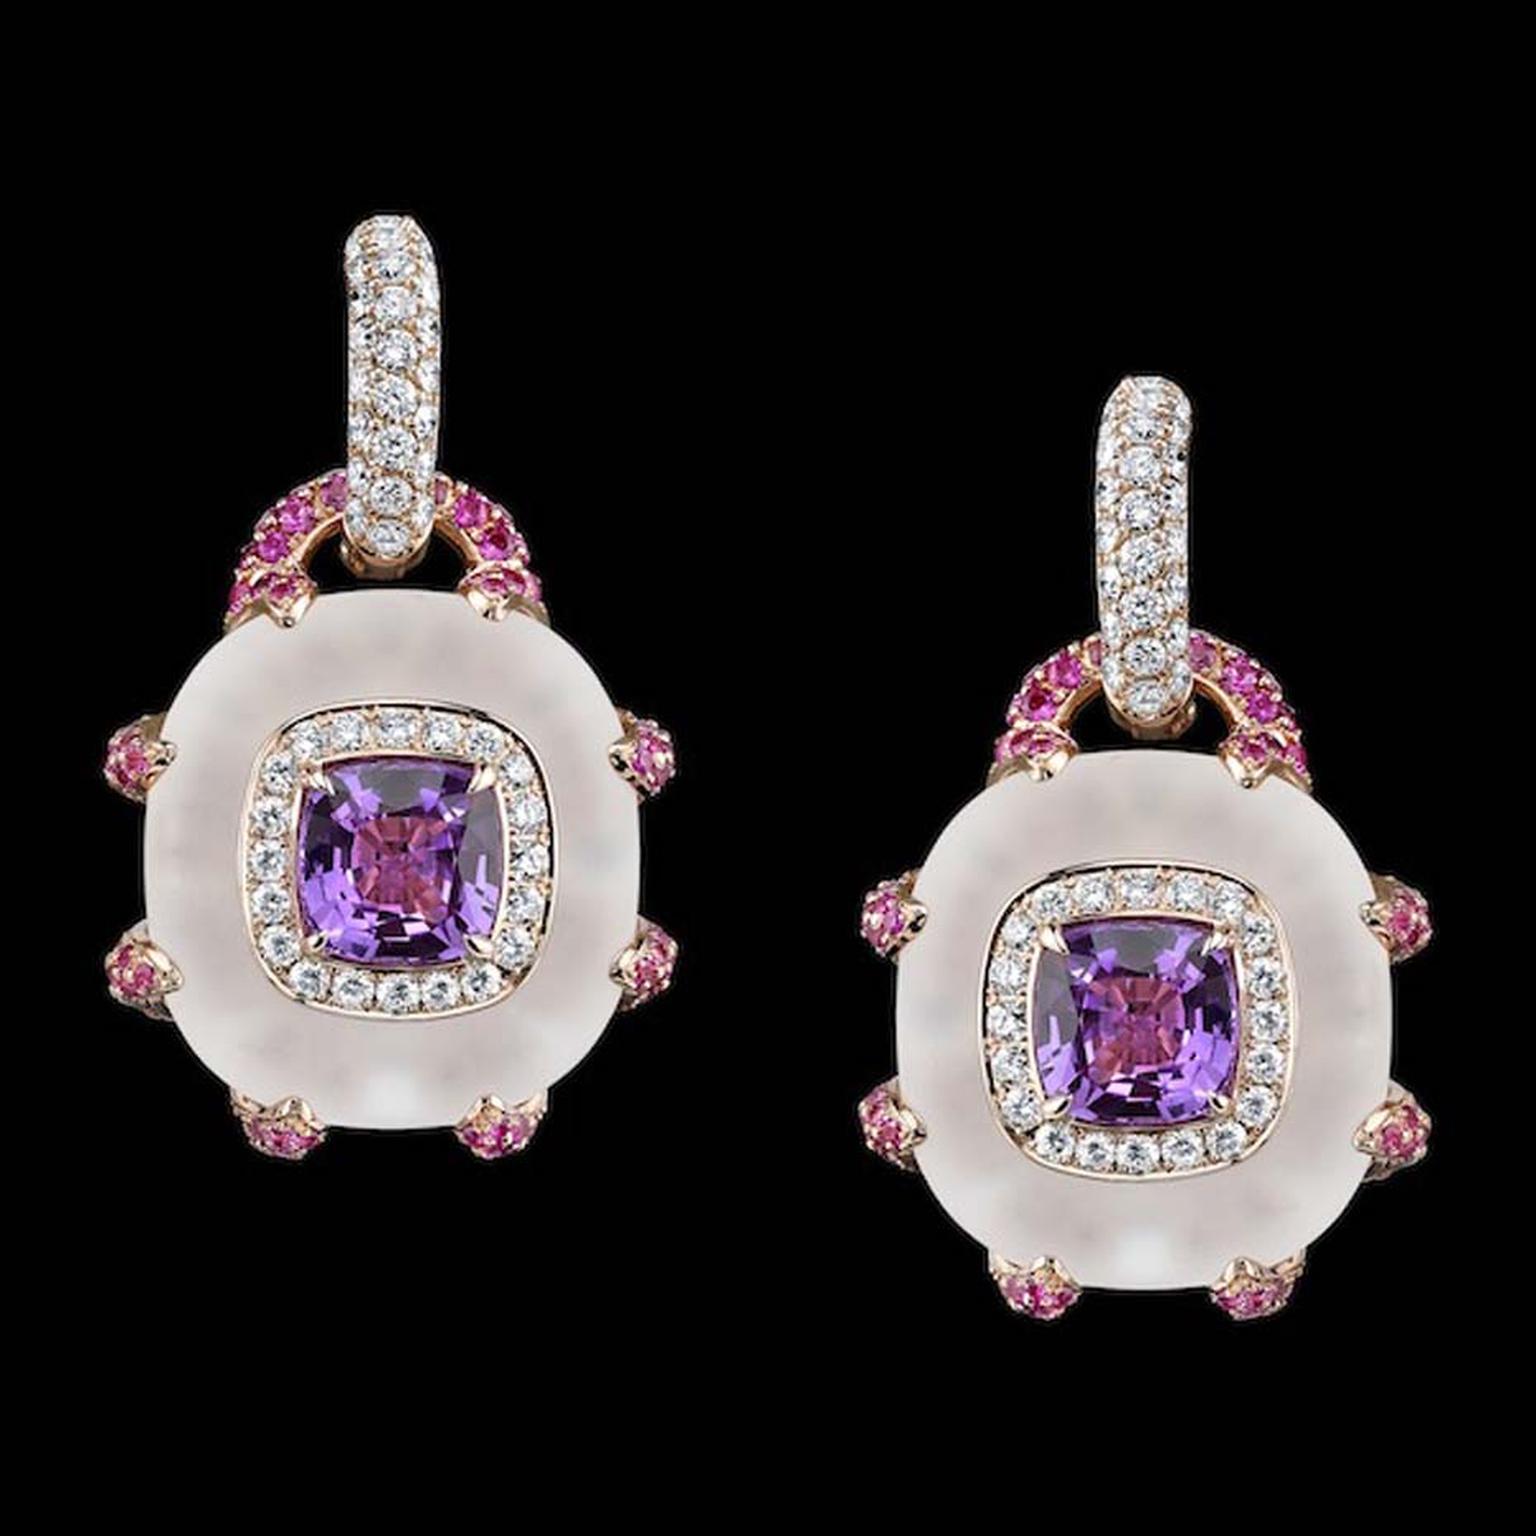 Robert Procop pink sapphire and crystal earrings.